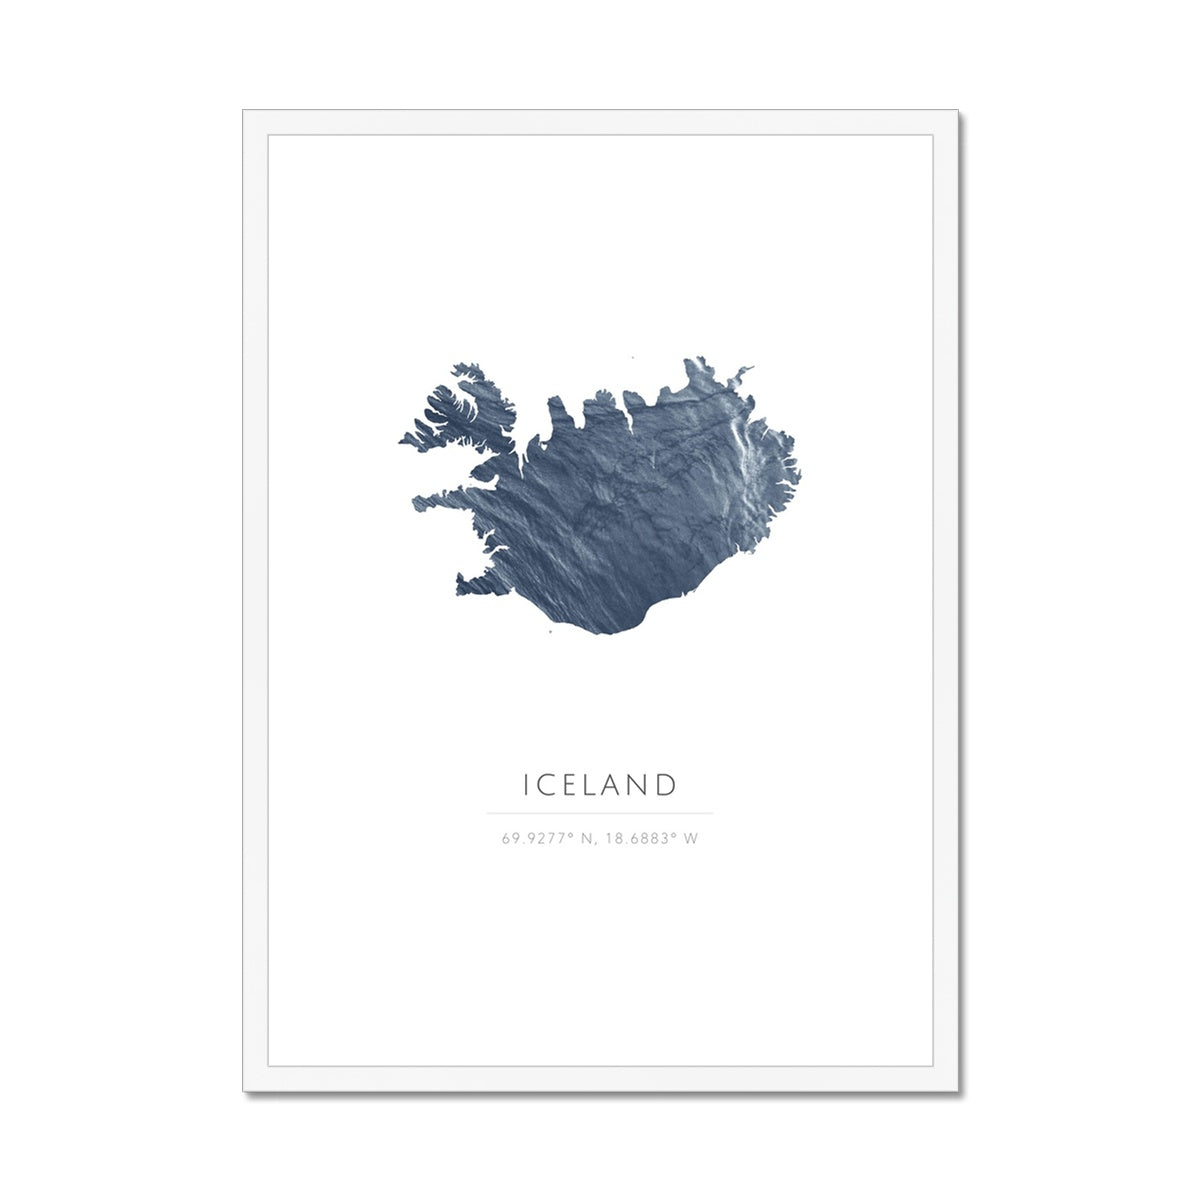 Iceland -  Framed & Mounted Print - For Richard